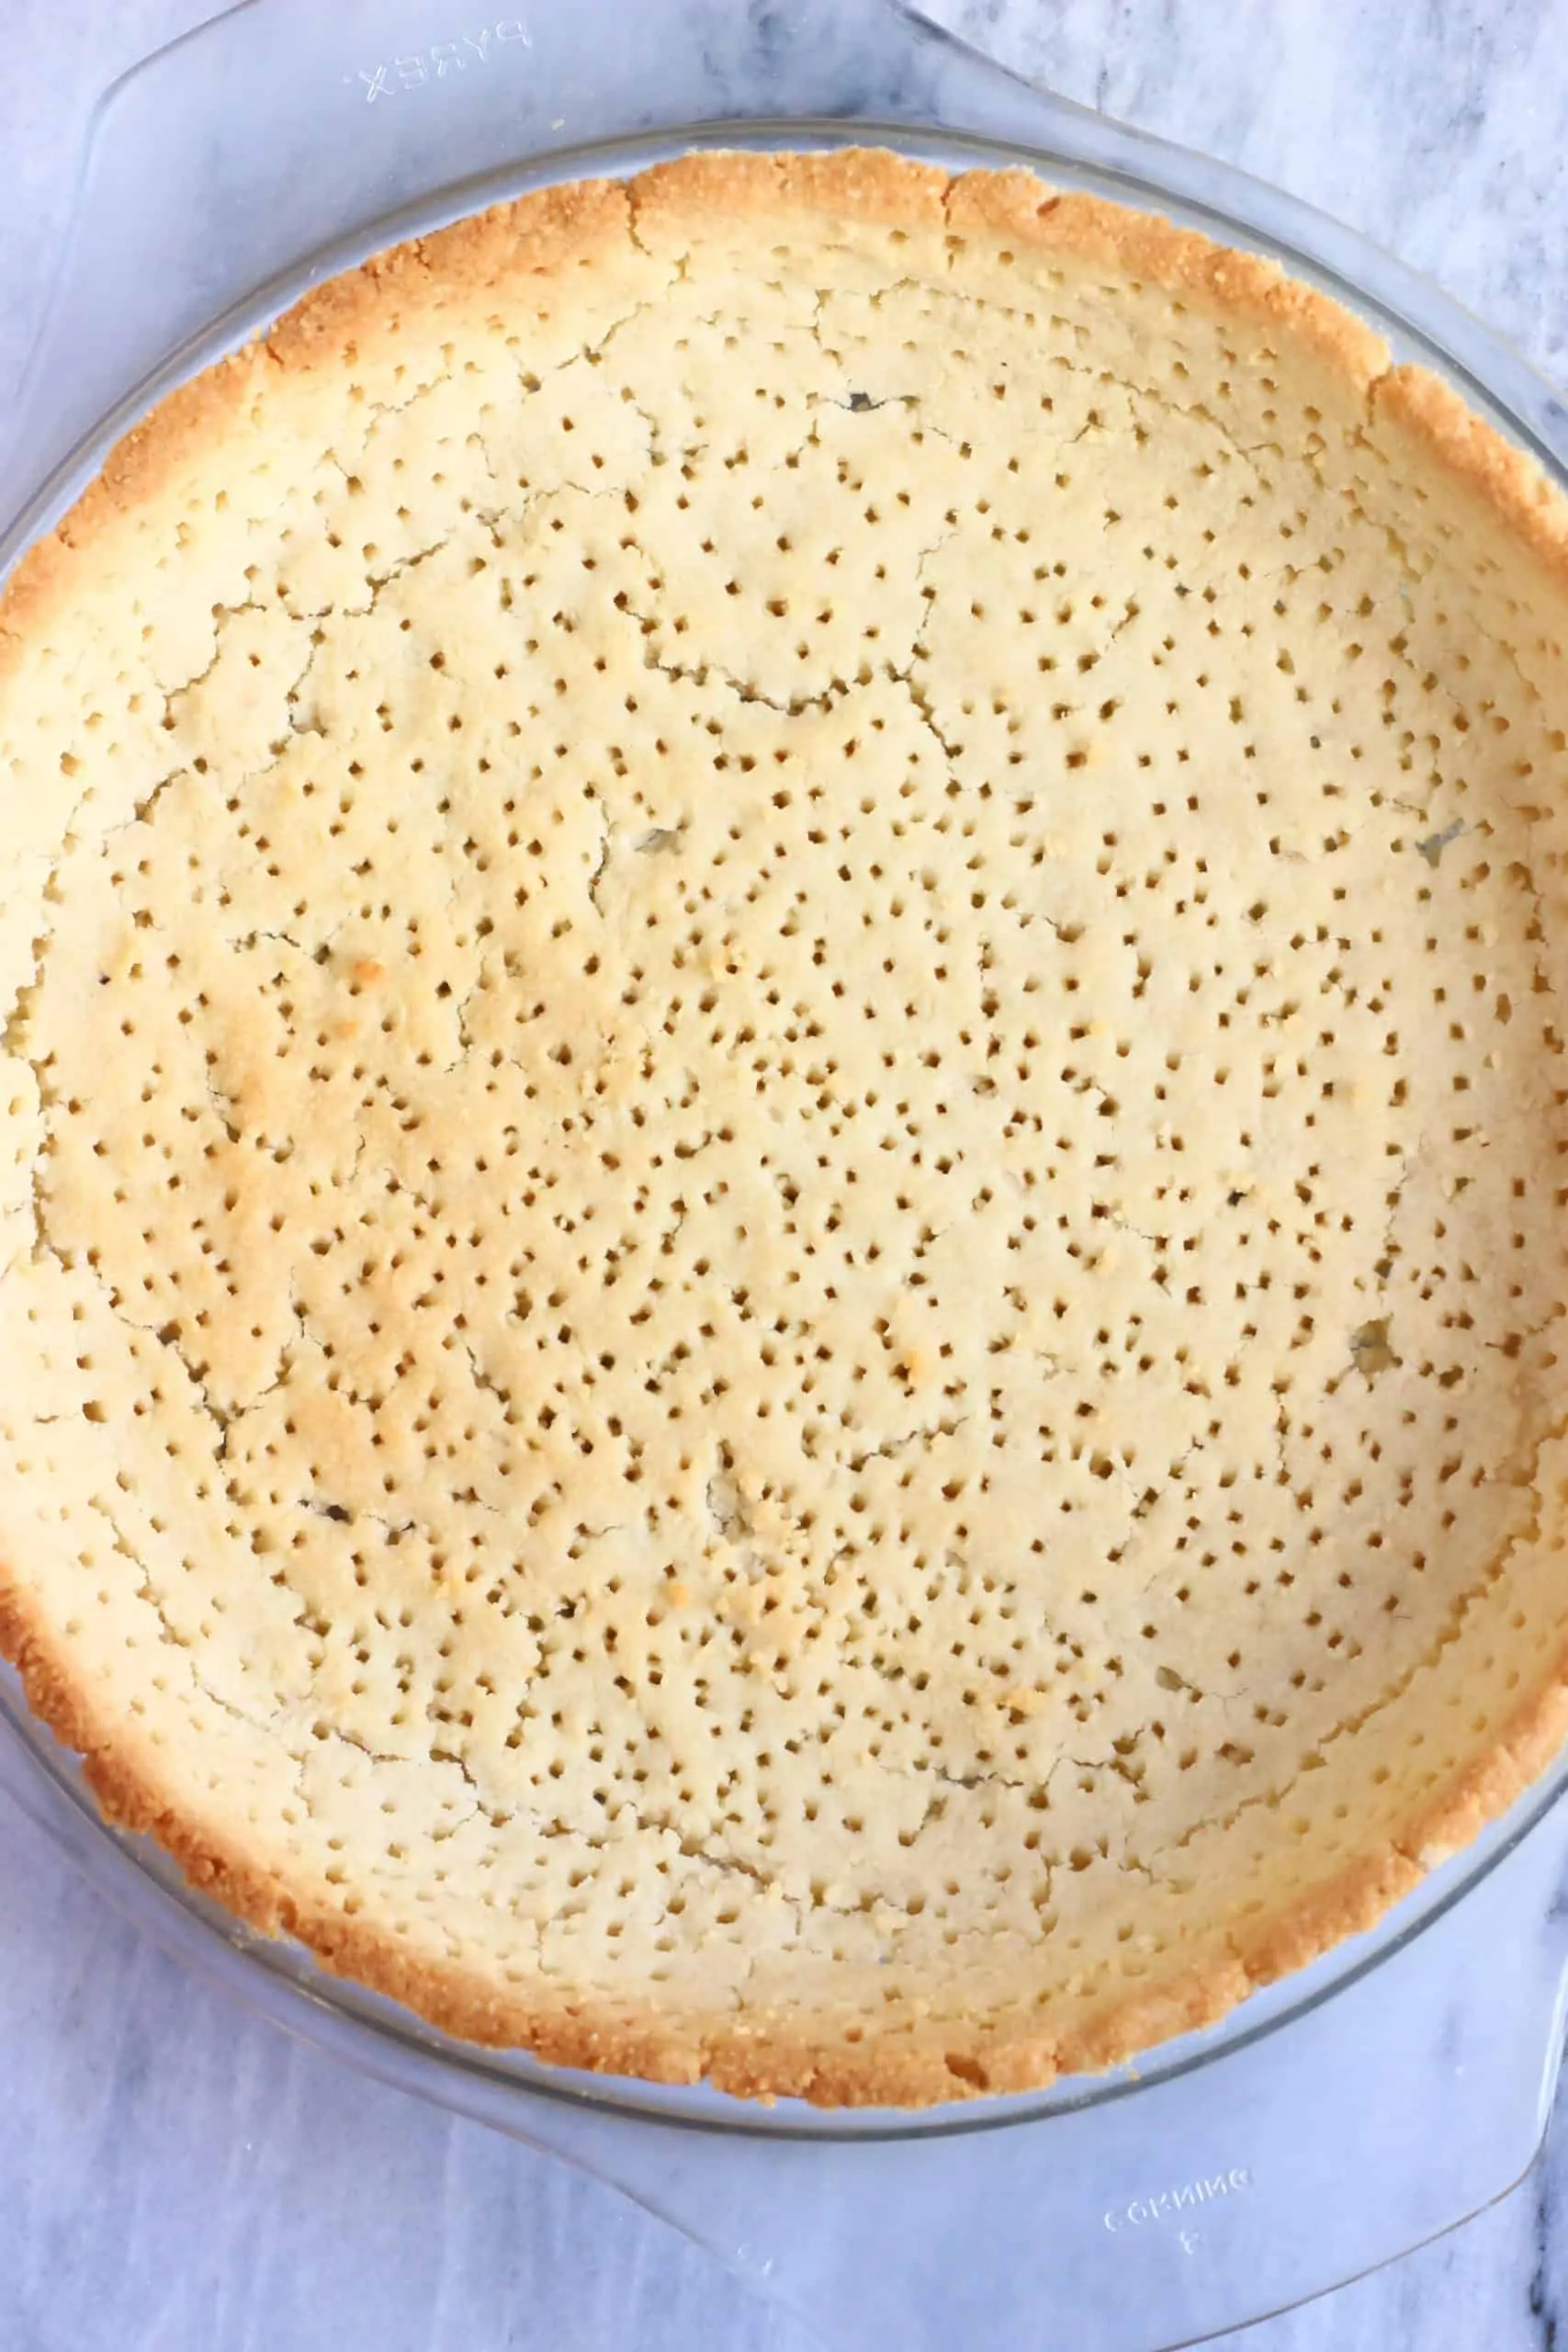 Baked gluten-free vegan tart crust in a pie dish